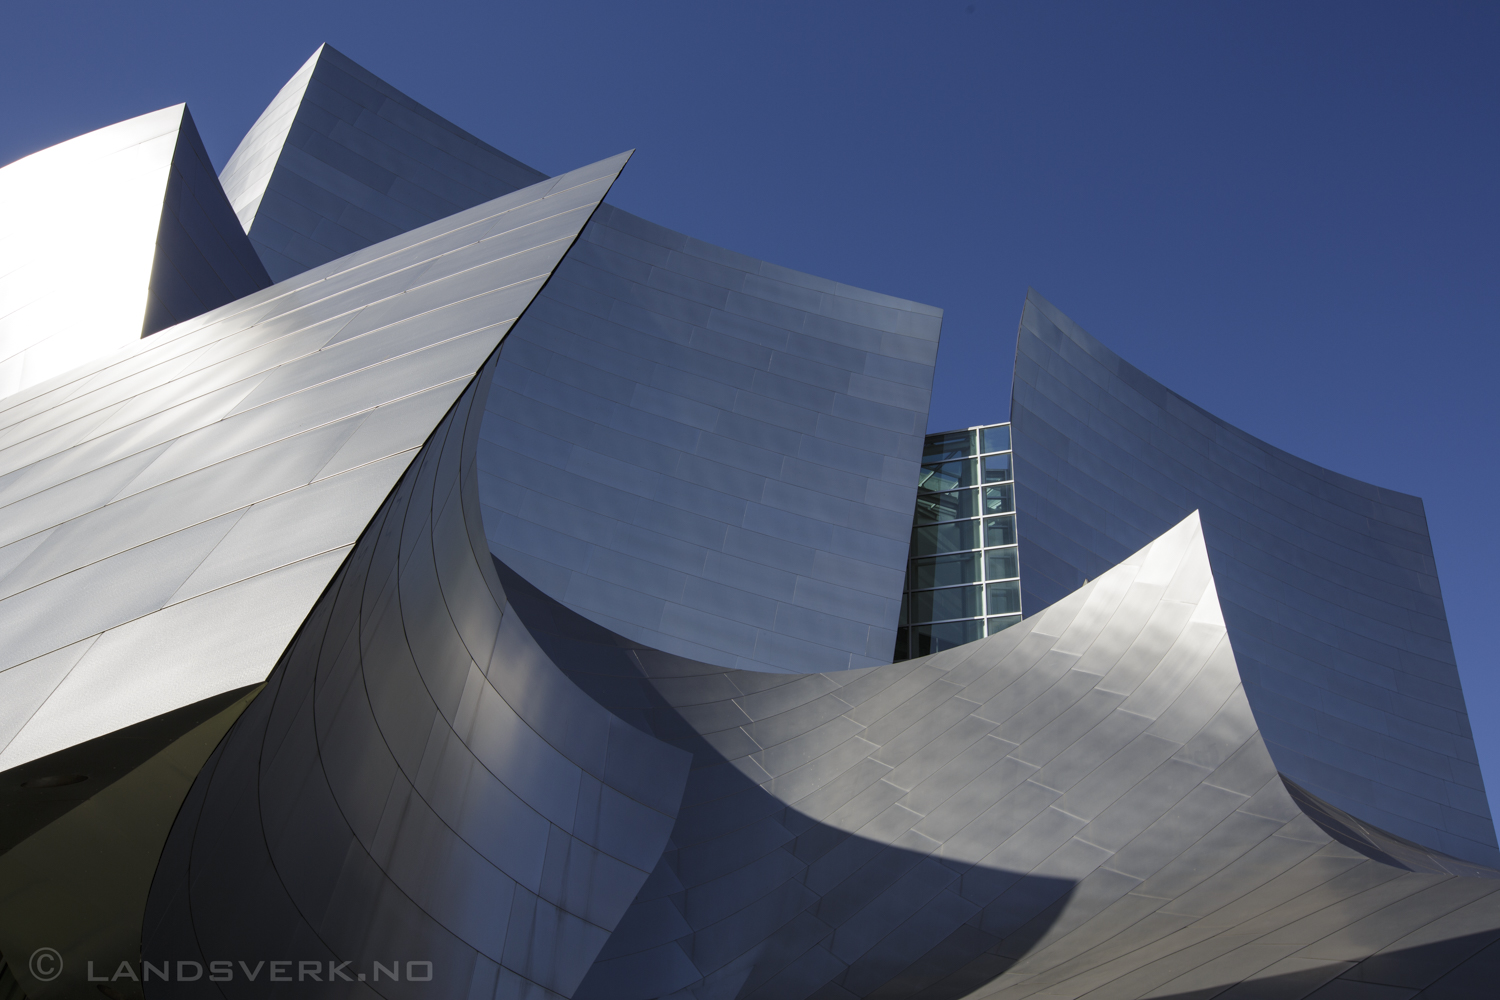 Walt Disney Concert Hall. Downtown Los Angeles, California.

(Canon EOS 5D Mark III / Canon EF 16-35mm f/2.8 L II USM)